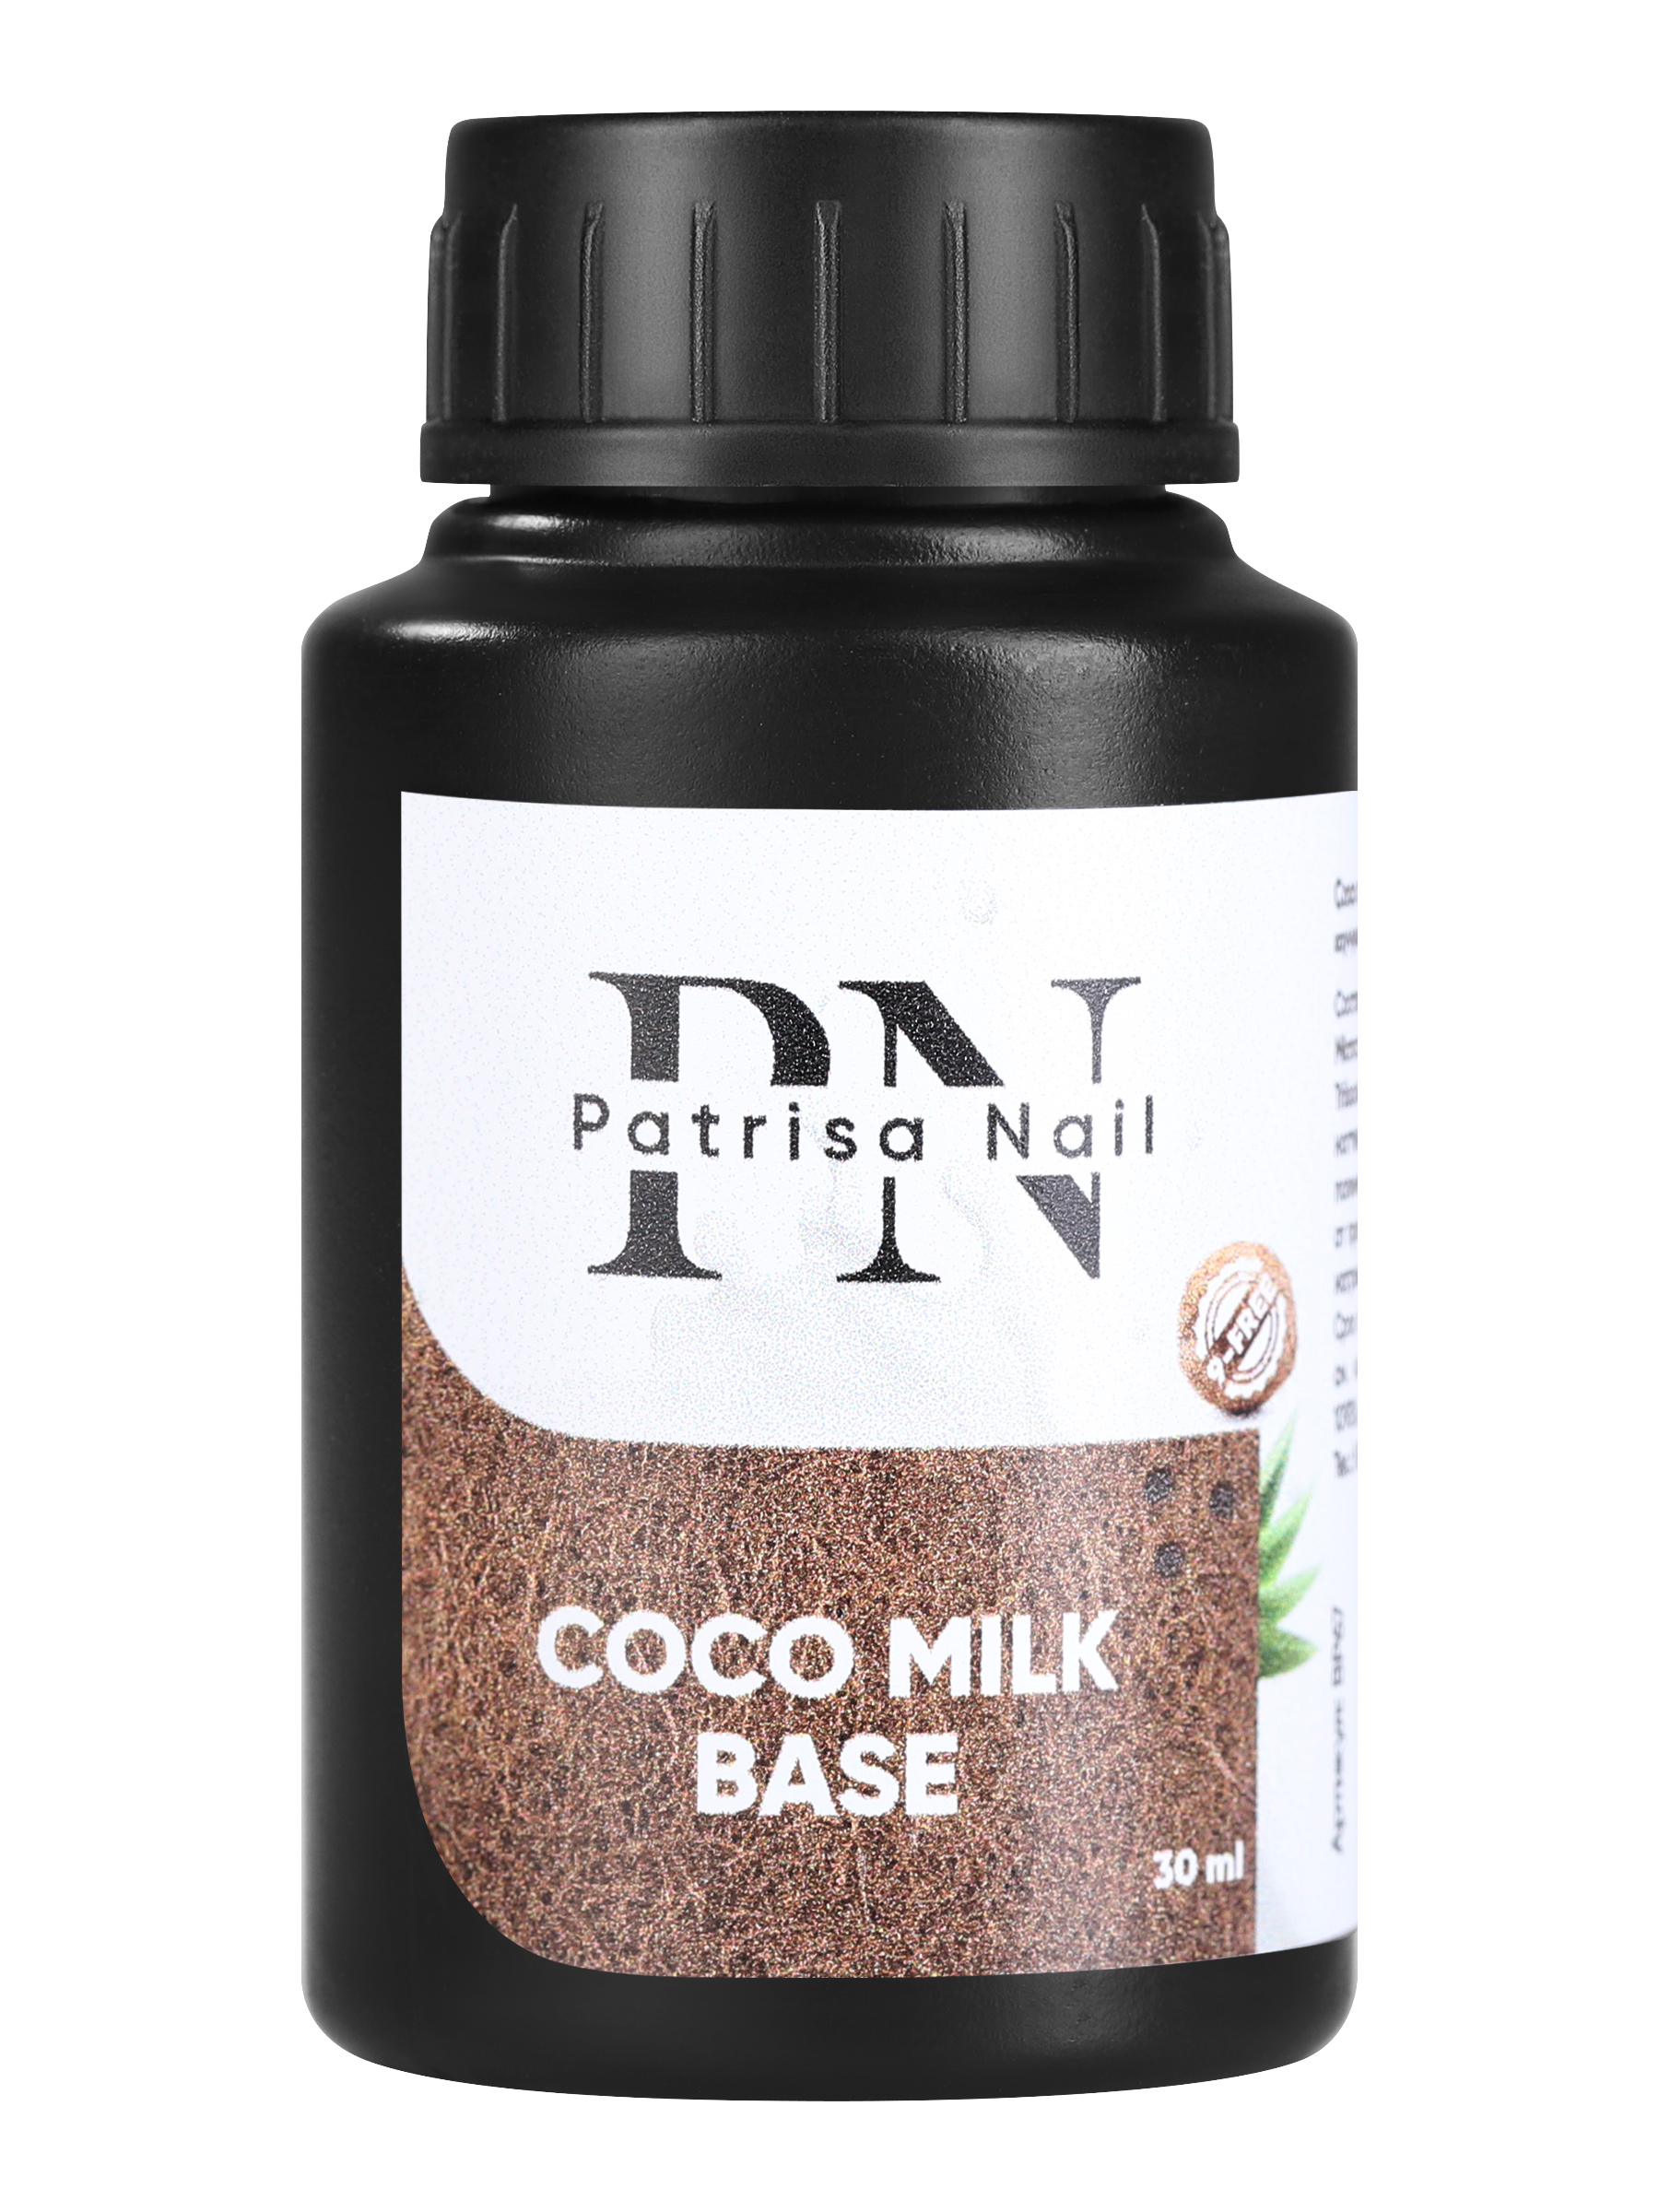 База для гель-лака Patrisa Nail Coco milk base камуфлирующая каучуковая молочная, 30 мл бутон на ножке для декорирования роза алоха молочная d 4 см